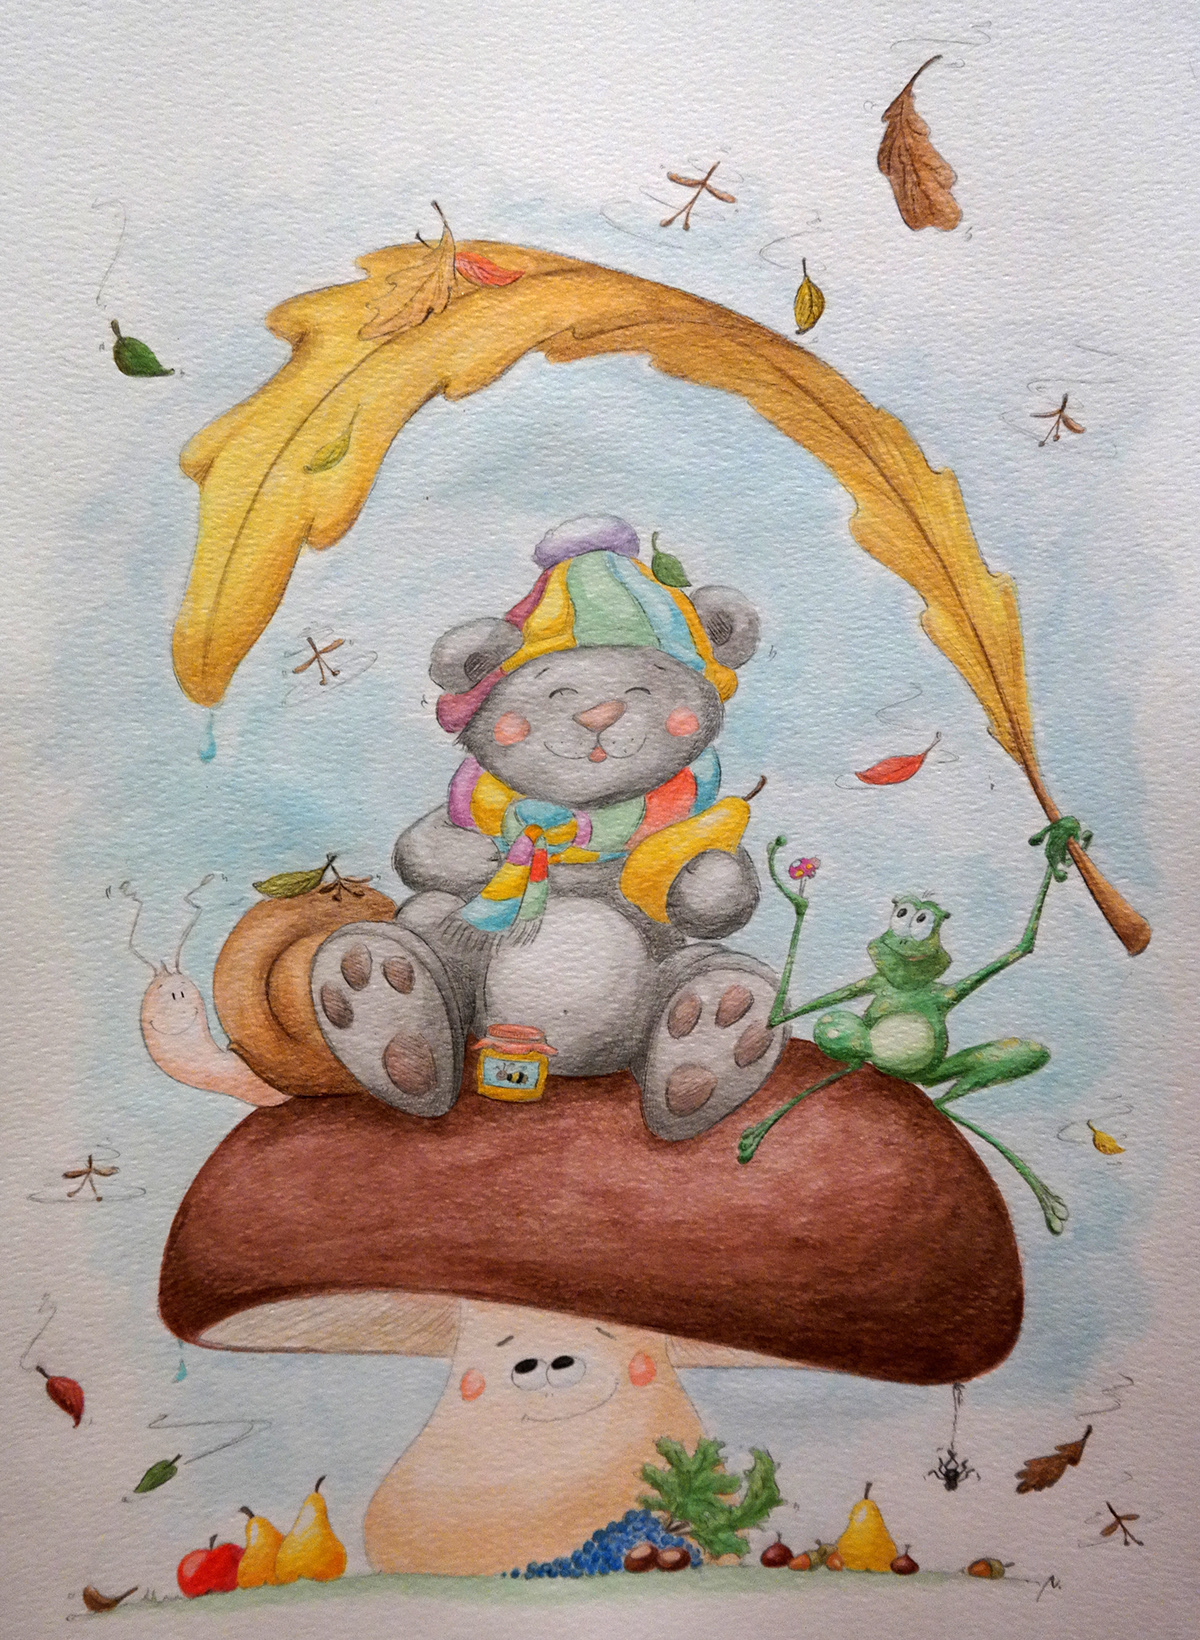 ChildrenIllustration animal TeddyBear frog snail mushroom autumn watercolor aquarelle